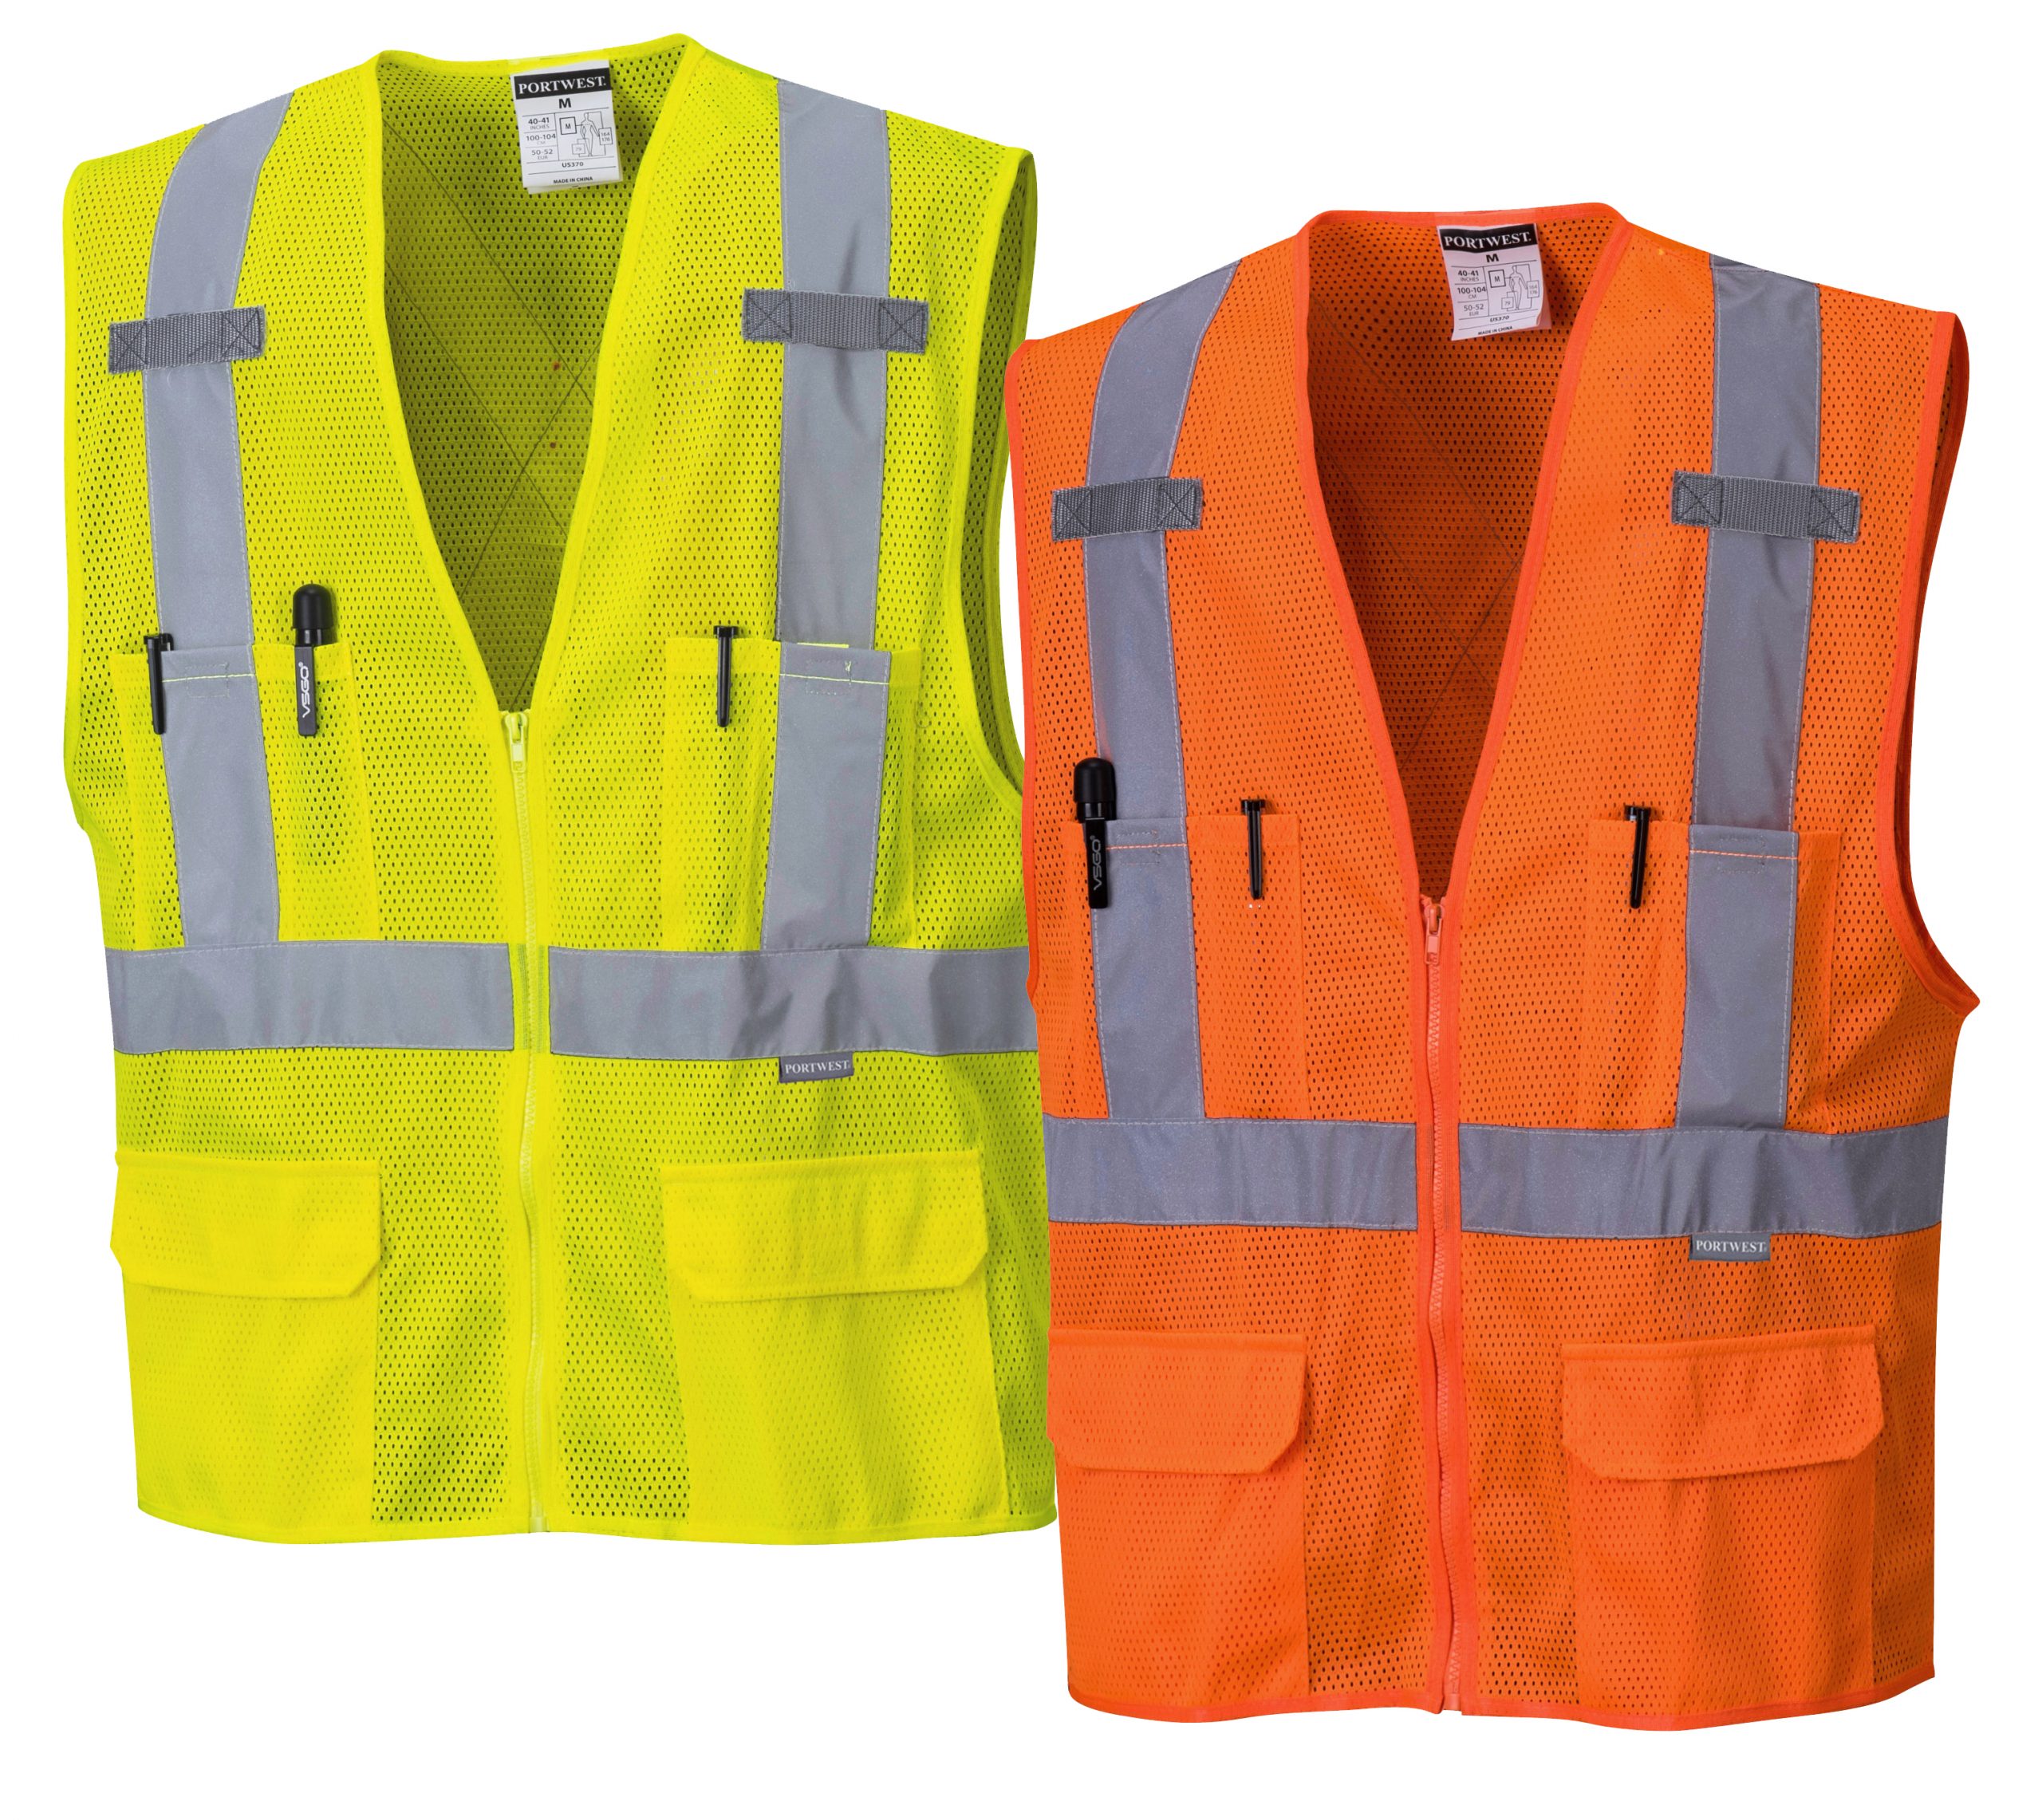 Multi colors reflective safety jackets